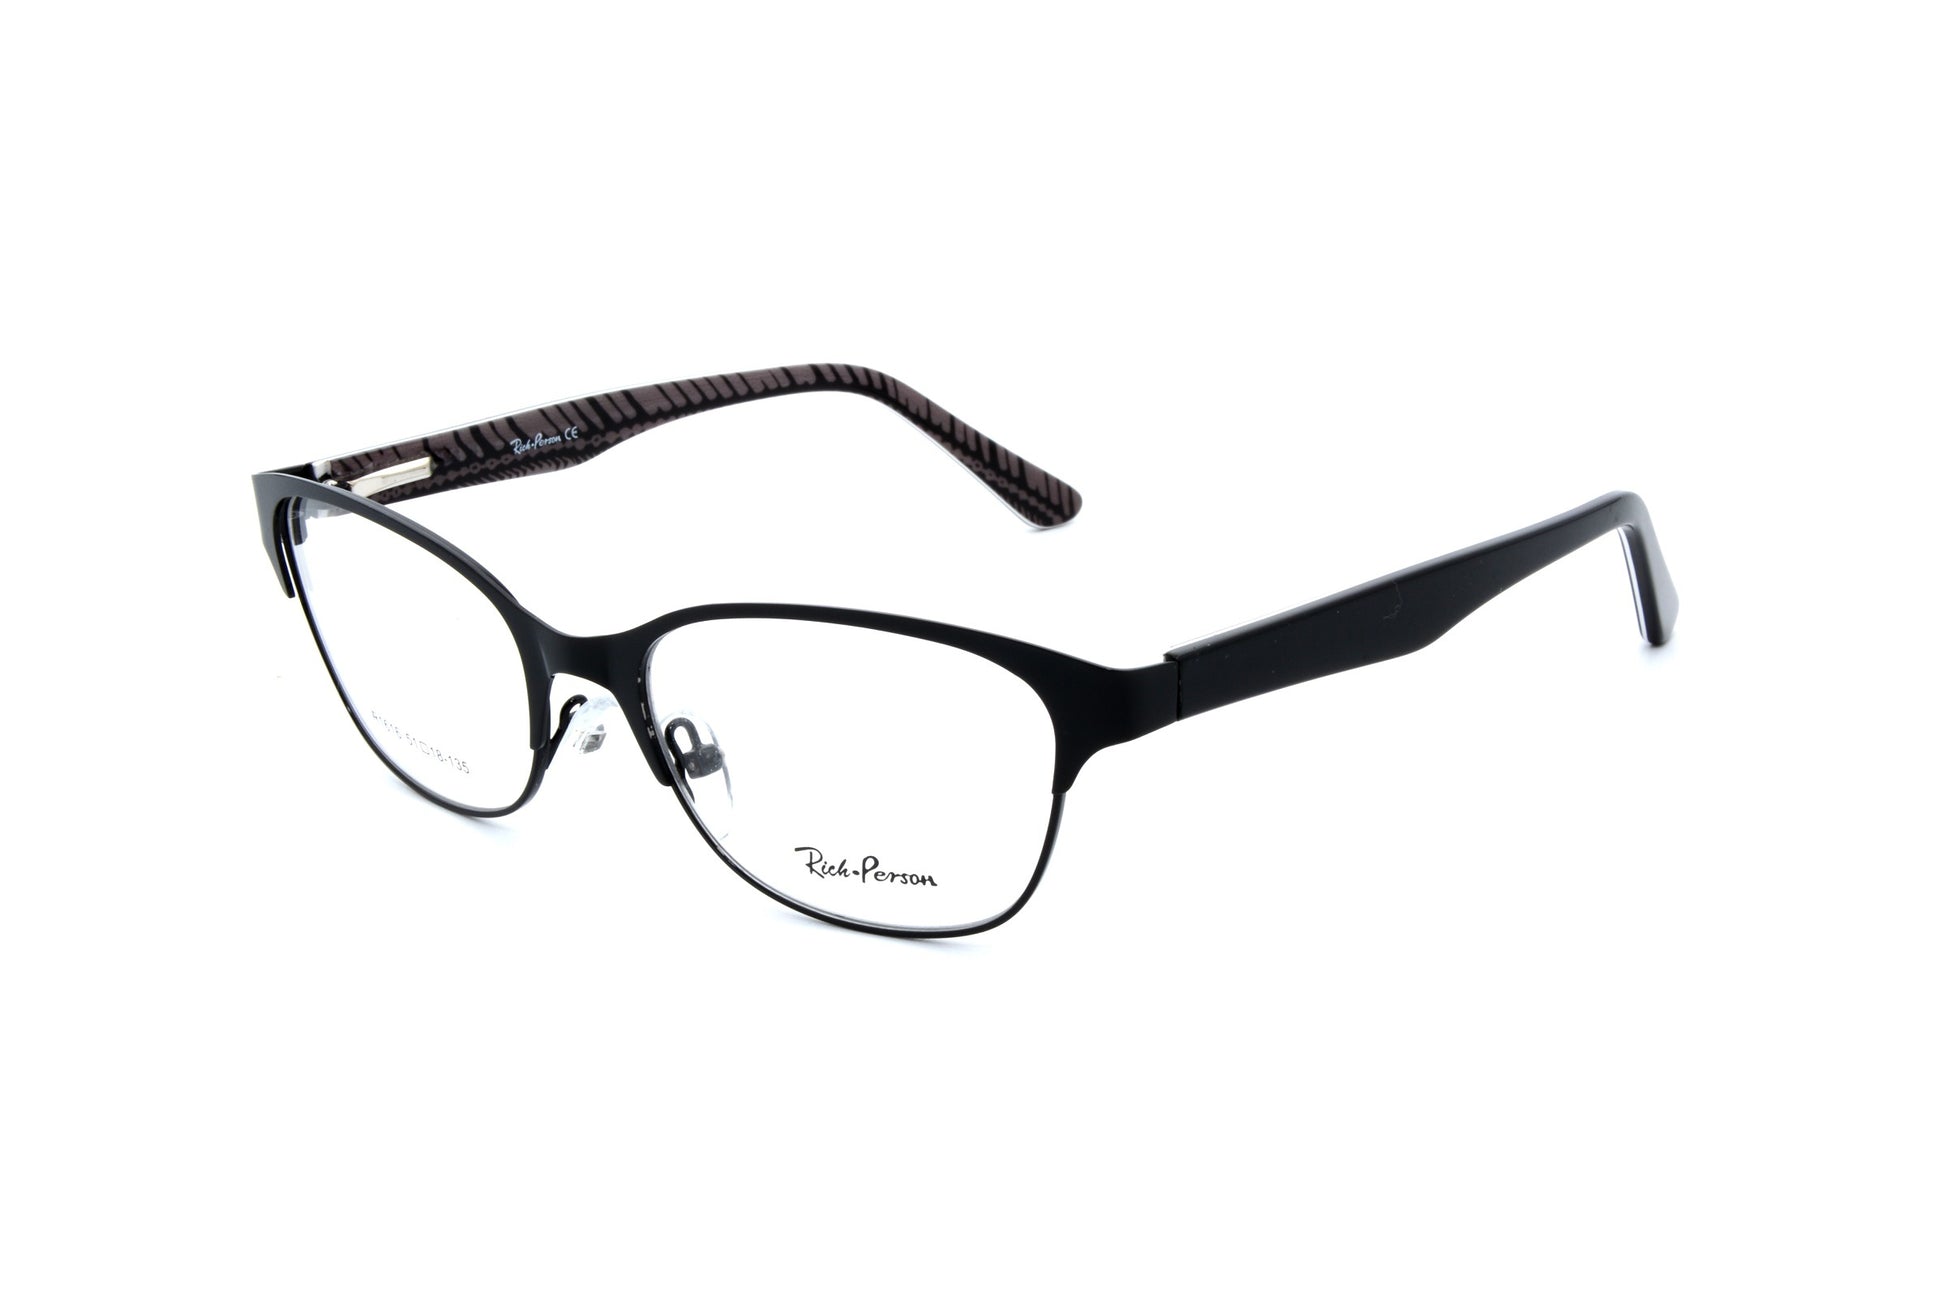 Rich person eyewear R1616, C2 - Optics Trading